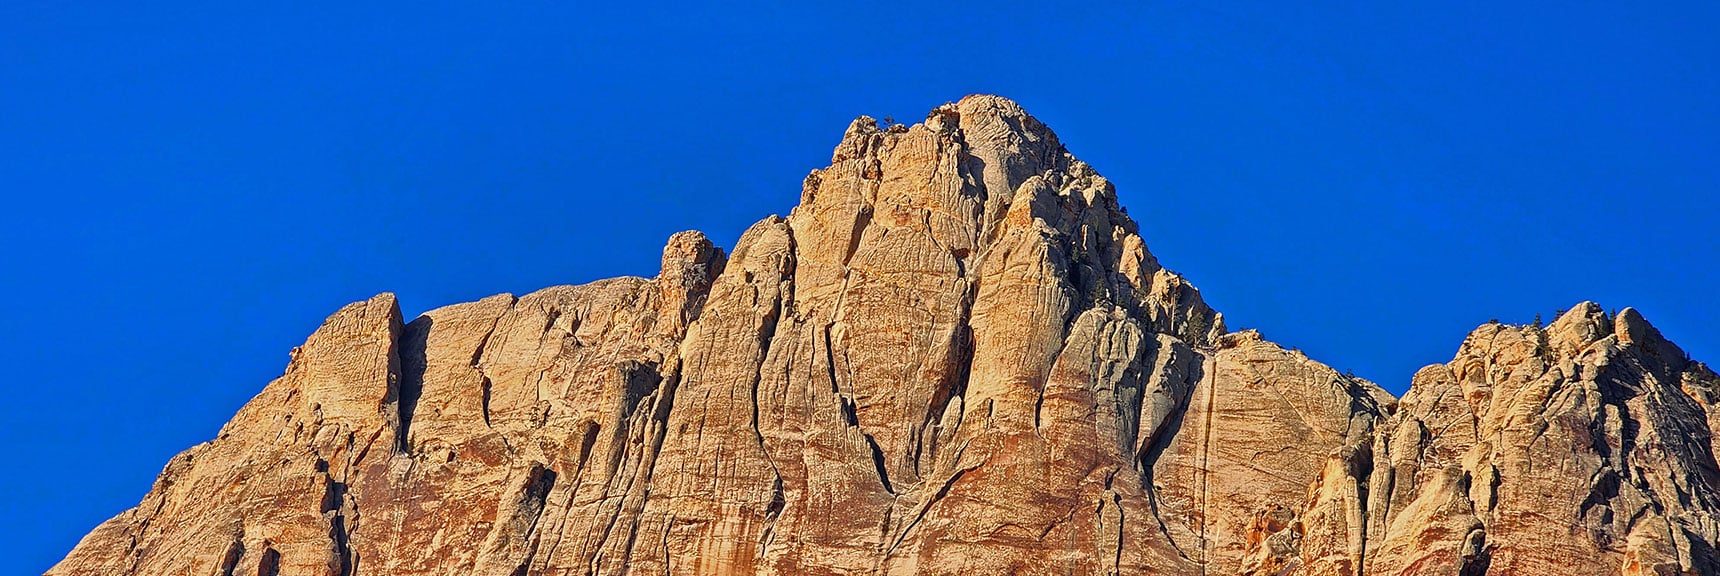 NE Mt. Wilson Summit Area | Knoll Trail | Red Rock Canyon National Conservation Area, Nevada | David Smith | LasVegasAreaTrails.com